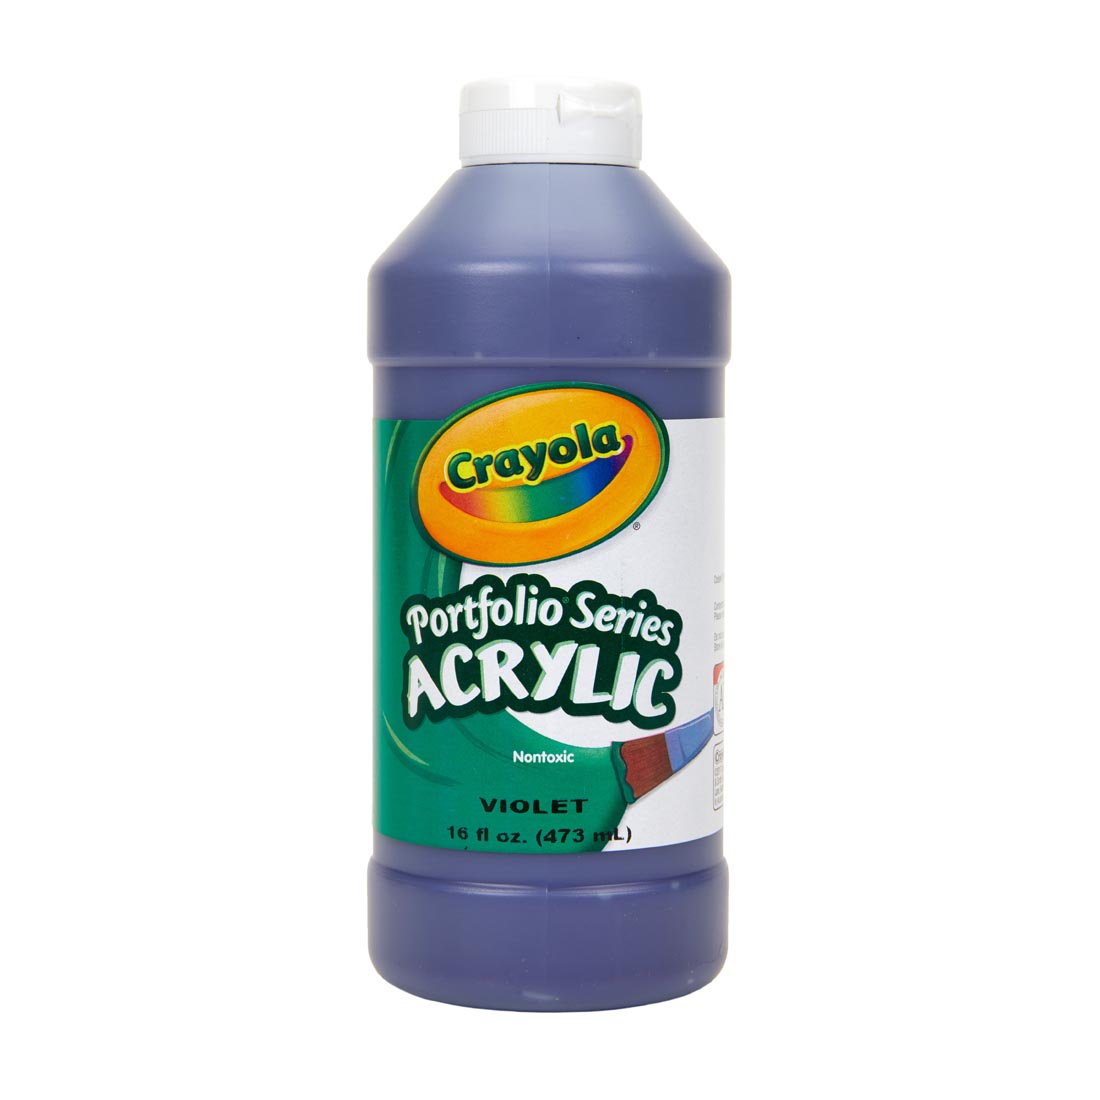 Bottle of Violet Crayola Portfolio Series Acrylic Paint